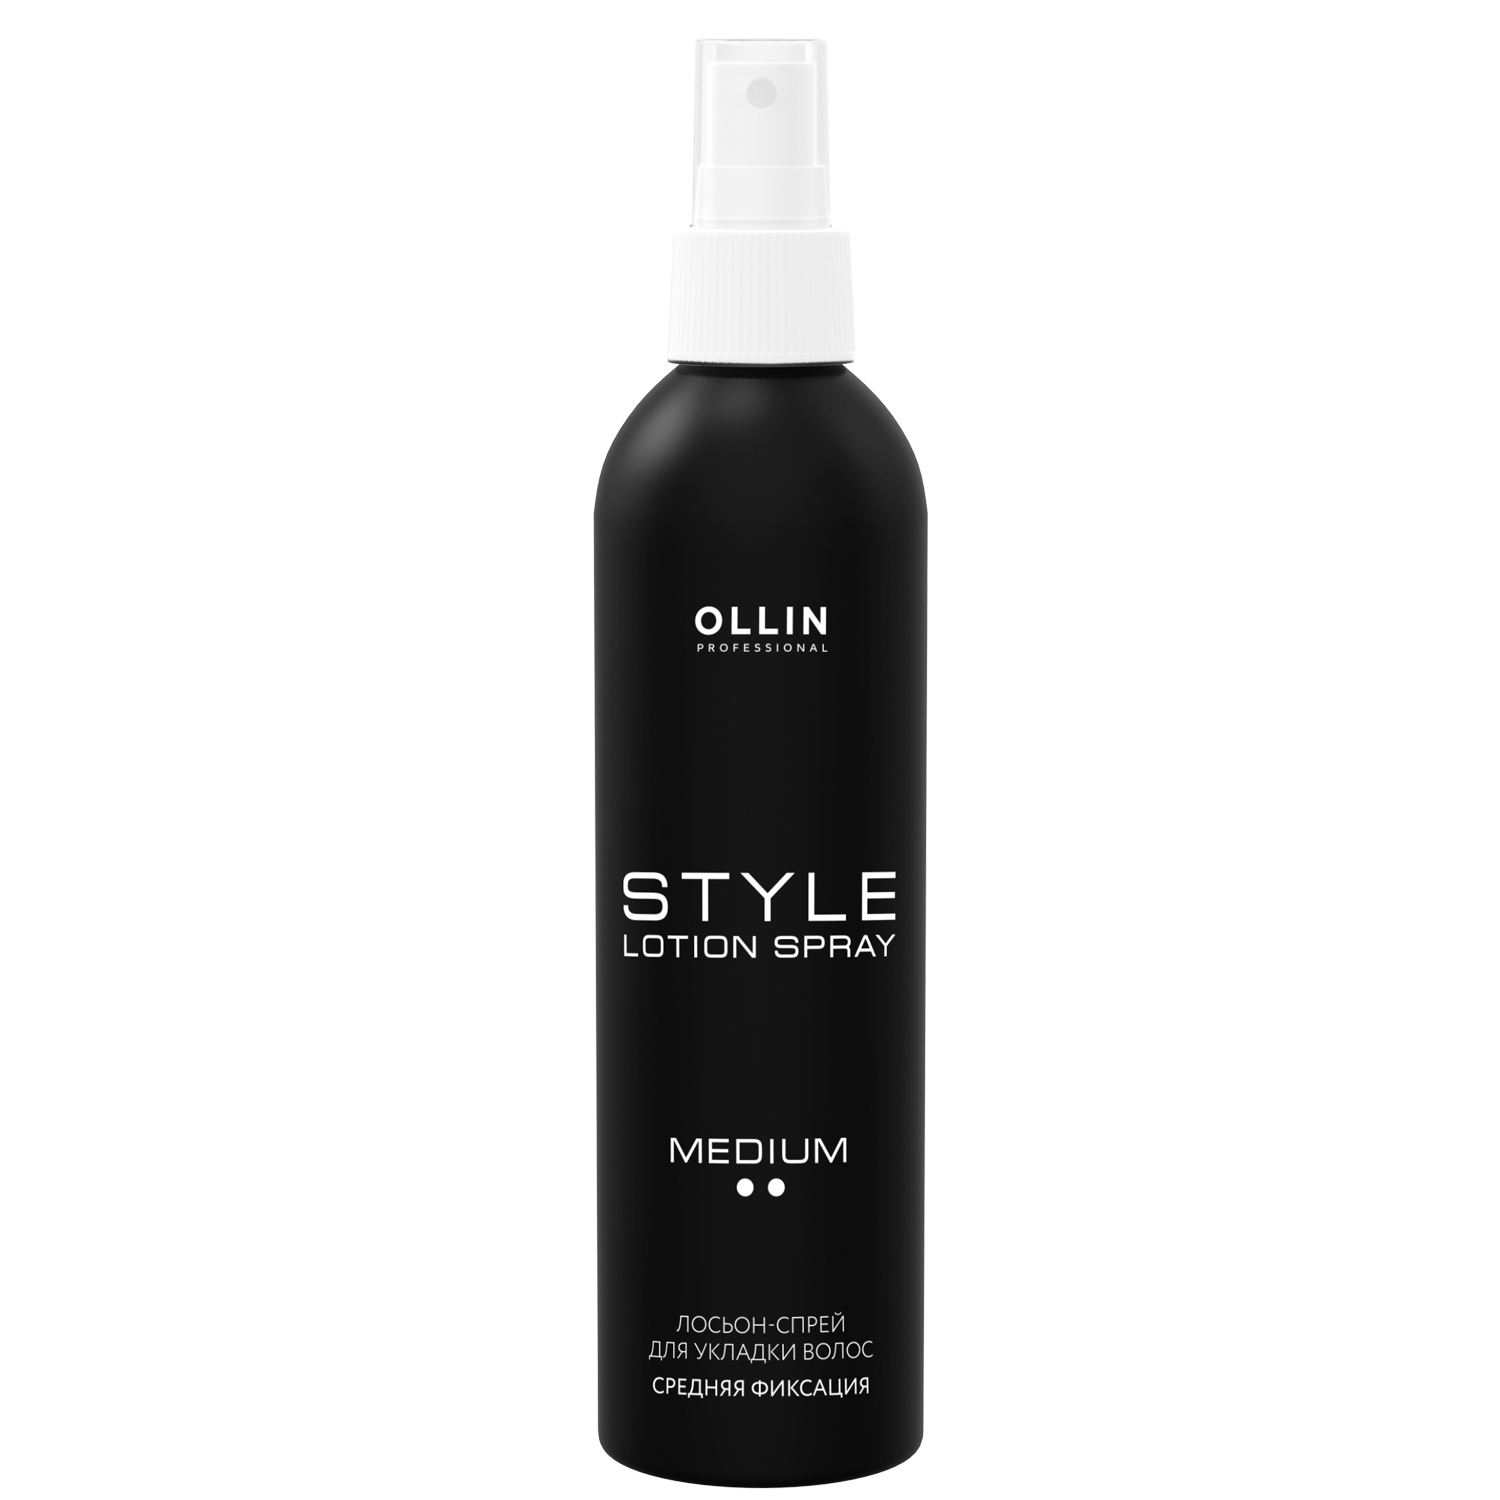 Ollin Professional Лосьон-спрей для укладки волос средней фиксации, 250 мл (Ollin Professional, Style) ollin professional style лосьон спрей для укладки волос средняя фиксация 250 мл 1 шт